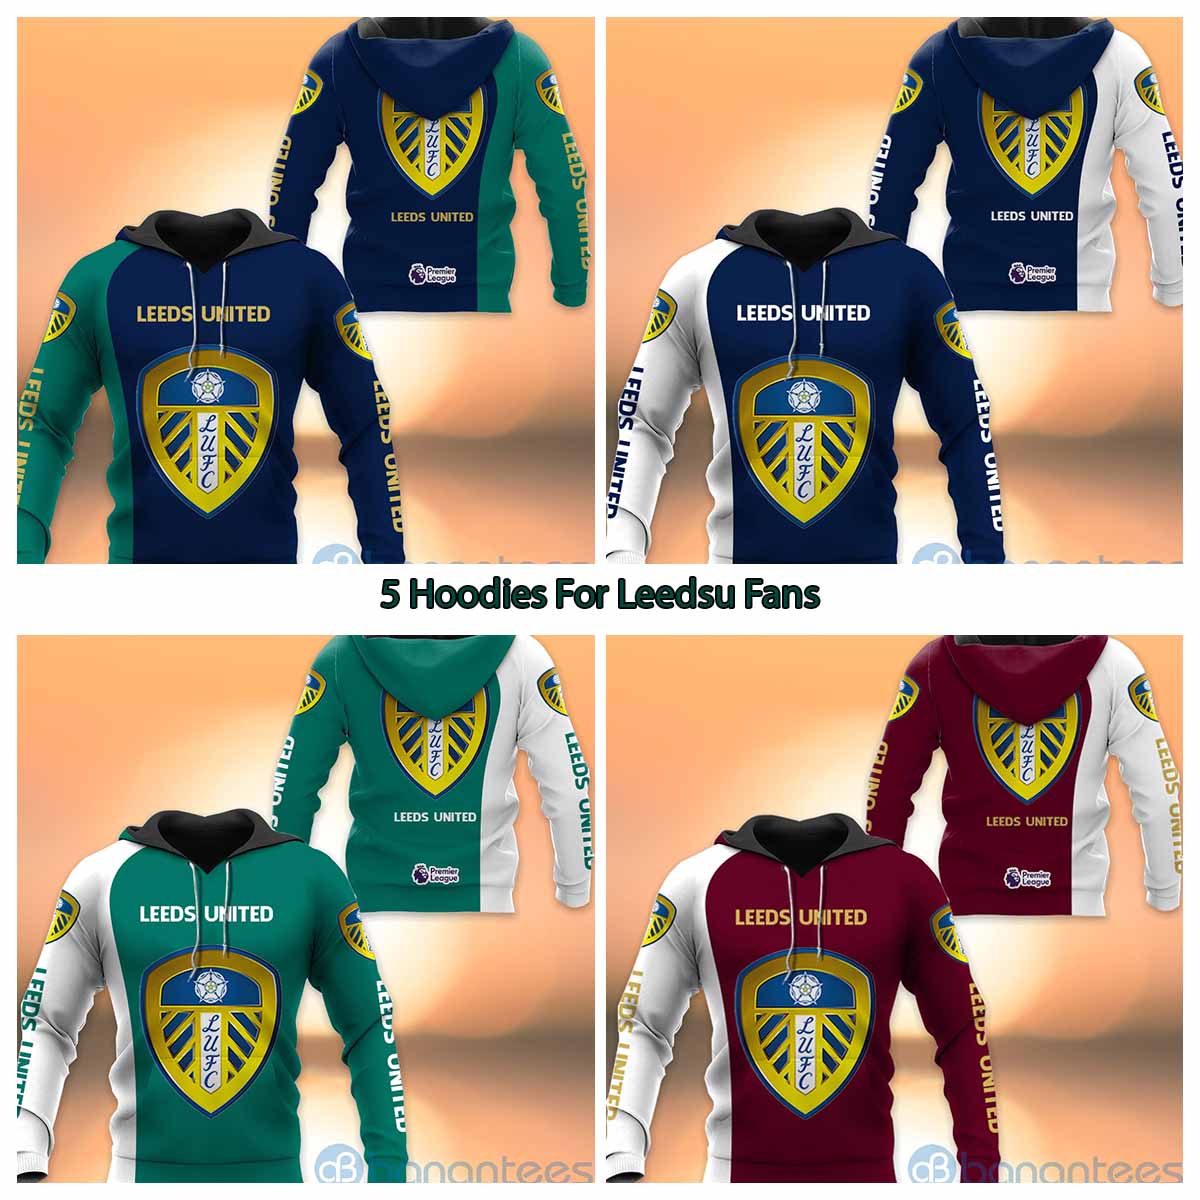 5 Hoodies For Leedsu Fans